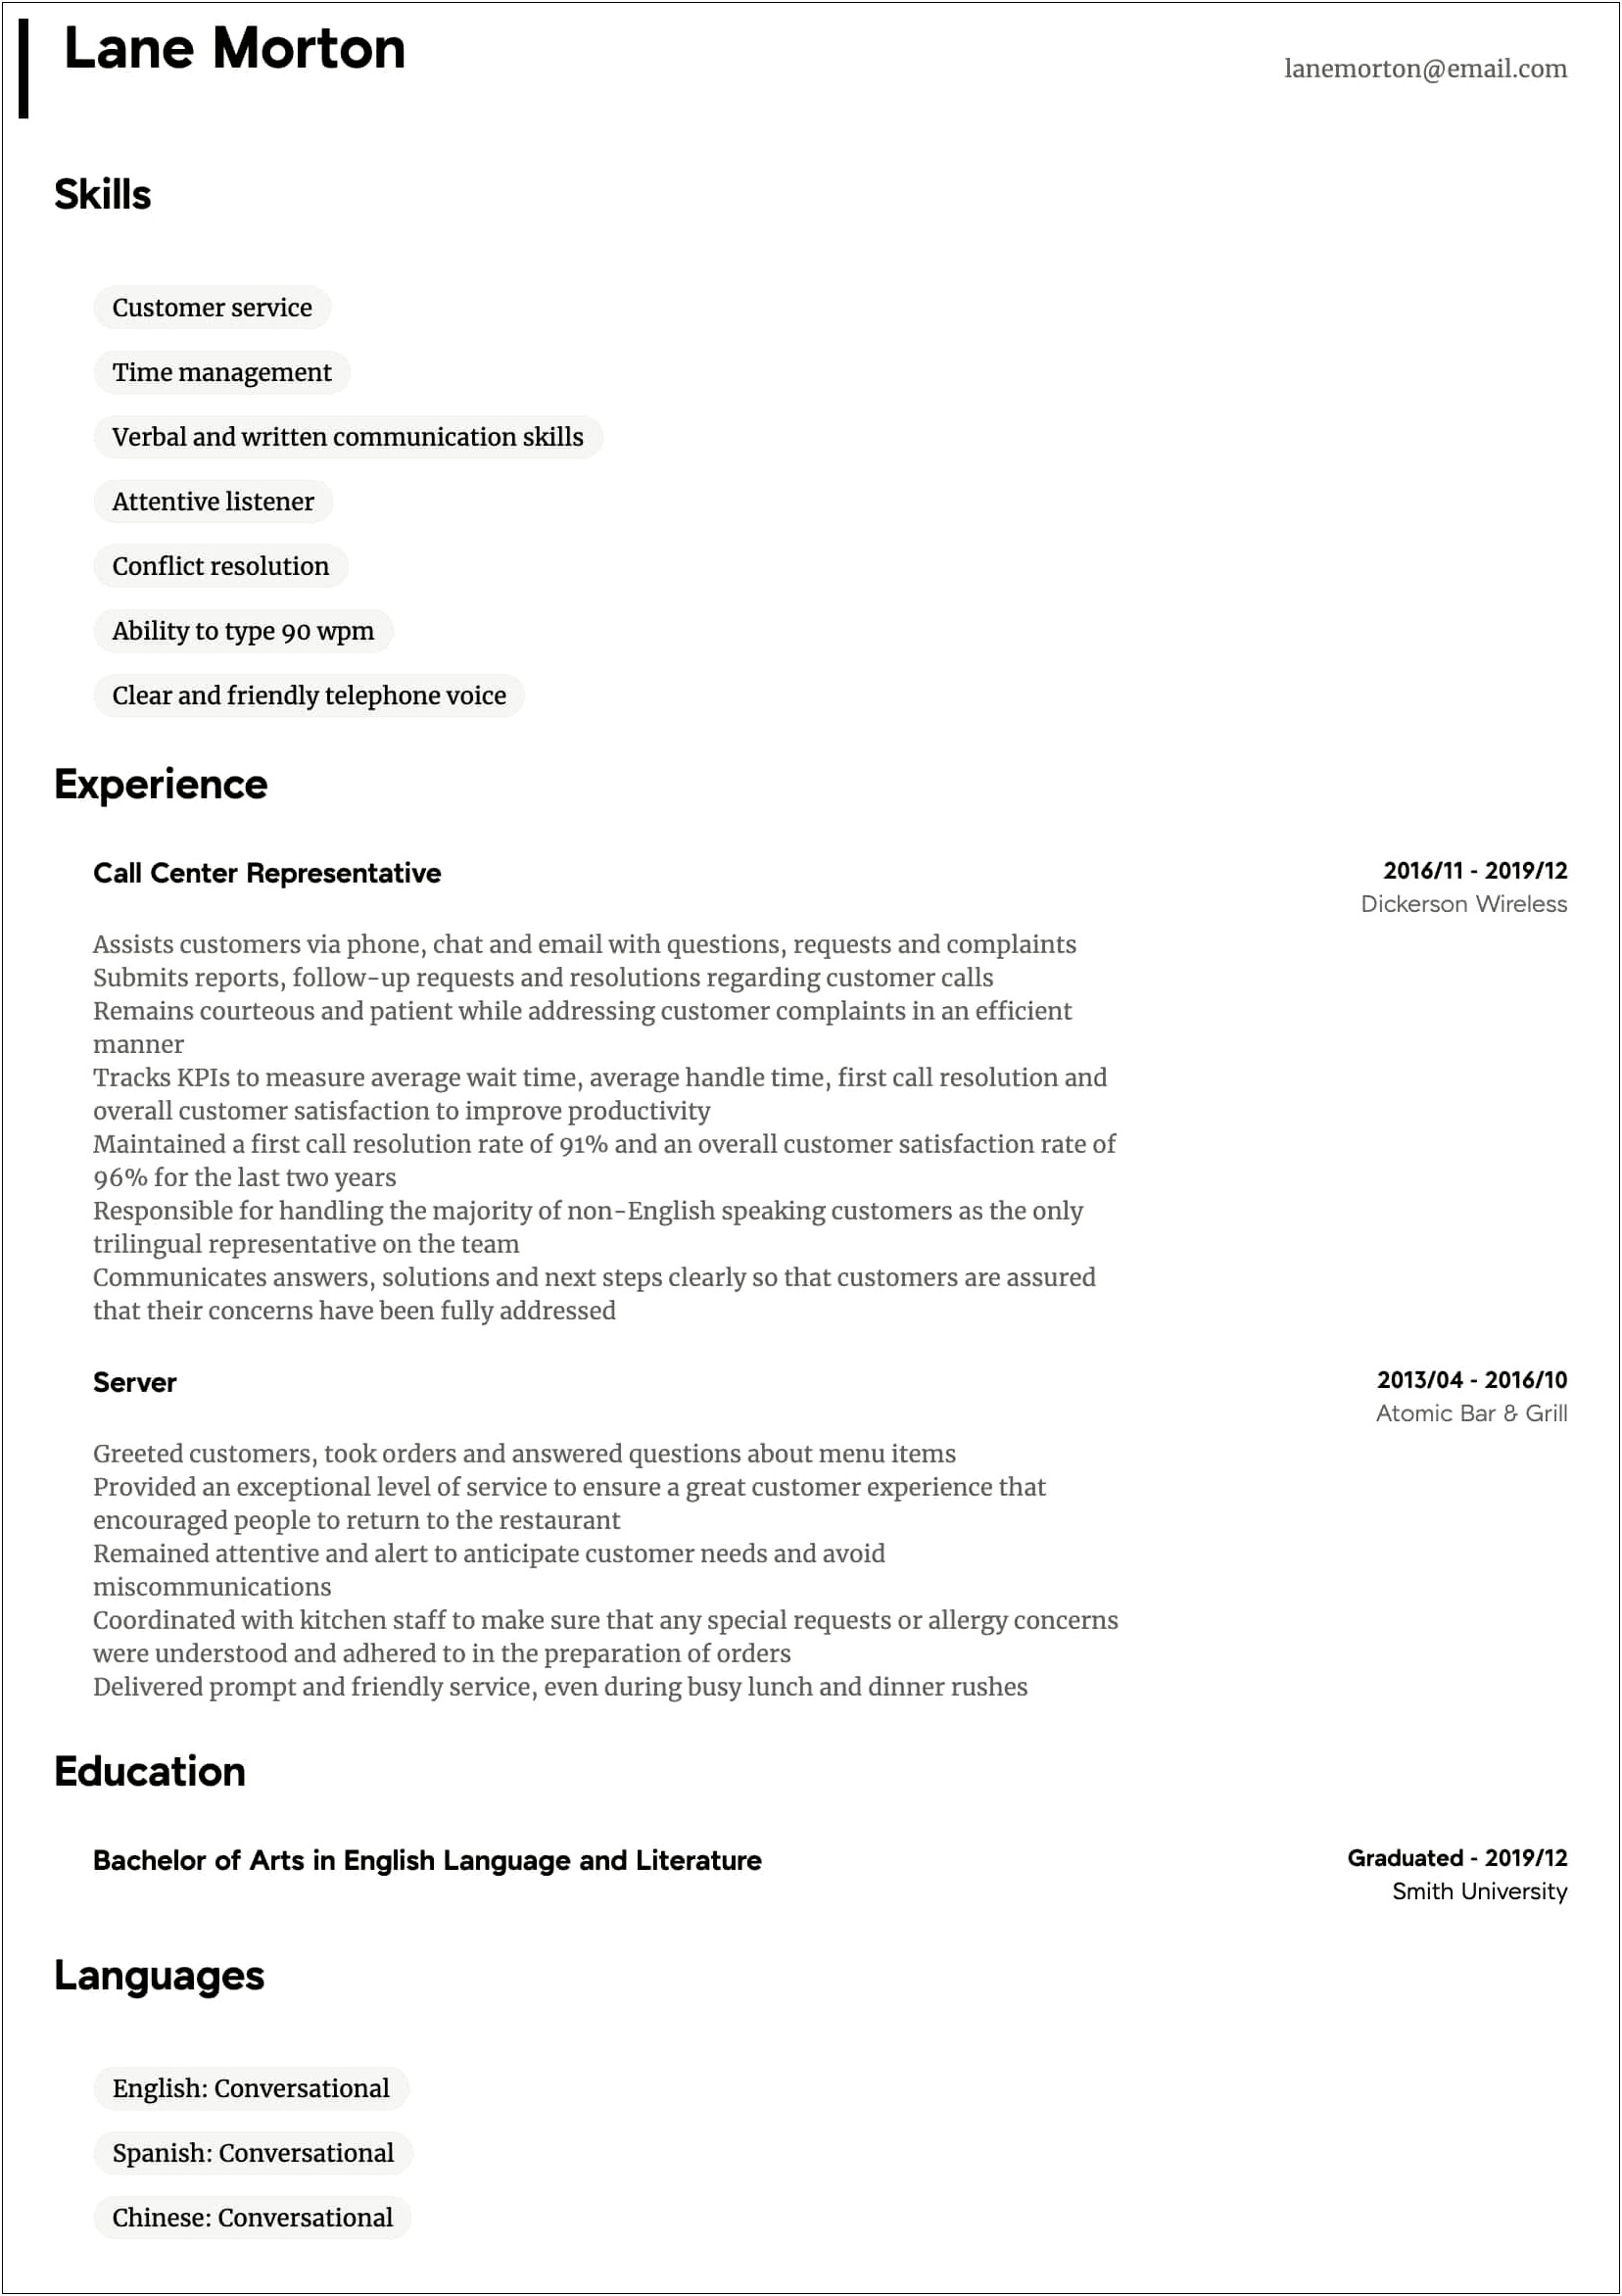 Sample Resume For Entry Level Non Voice Representative